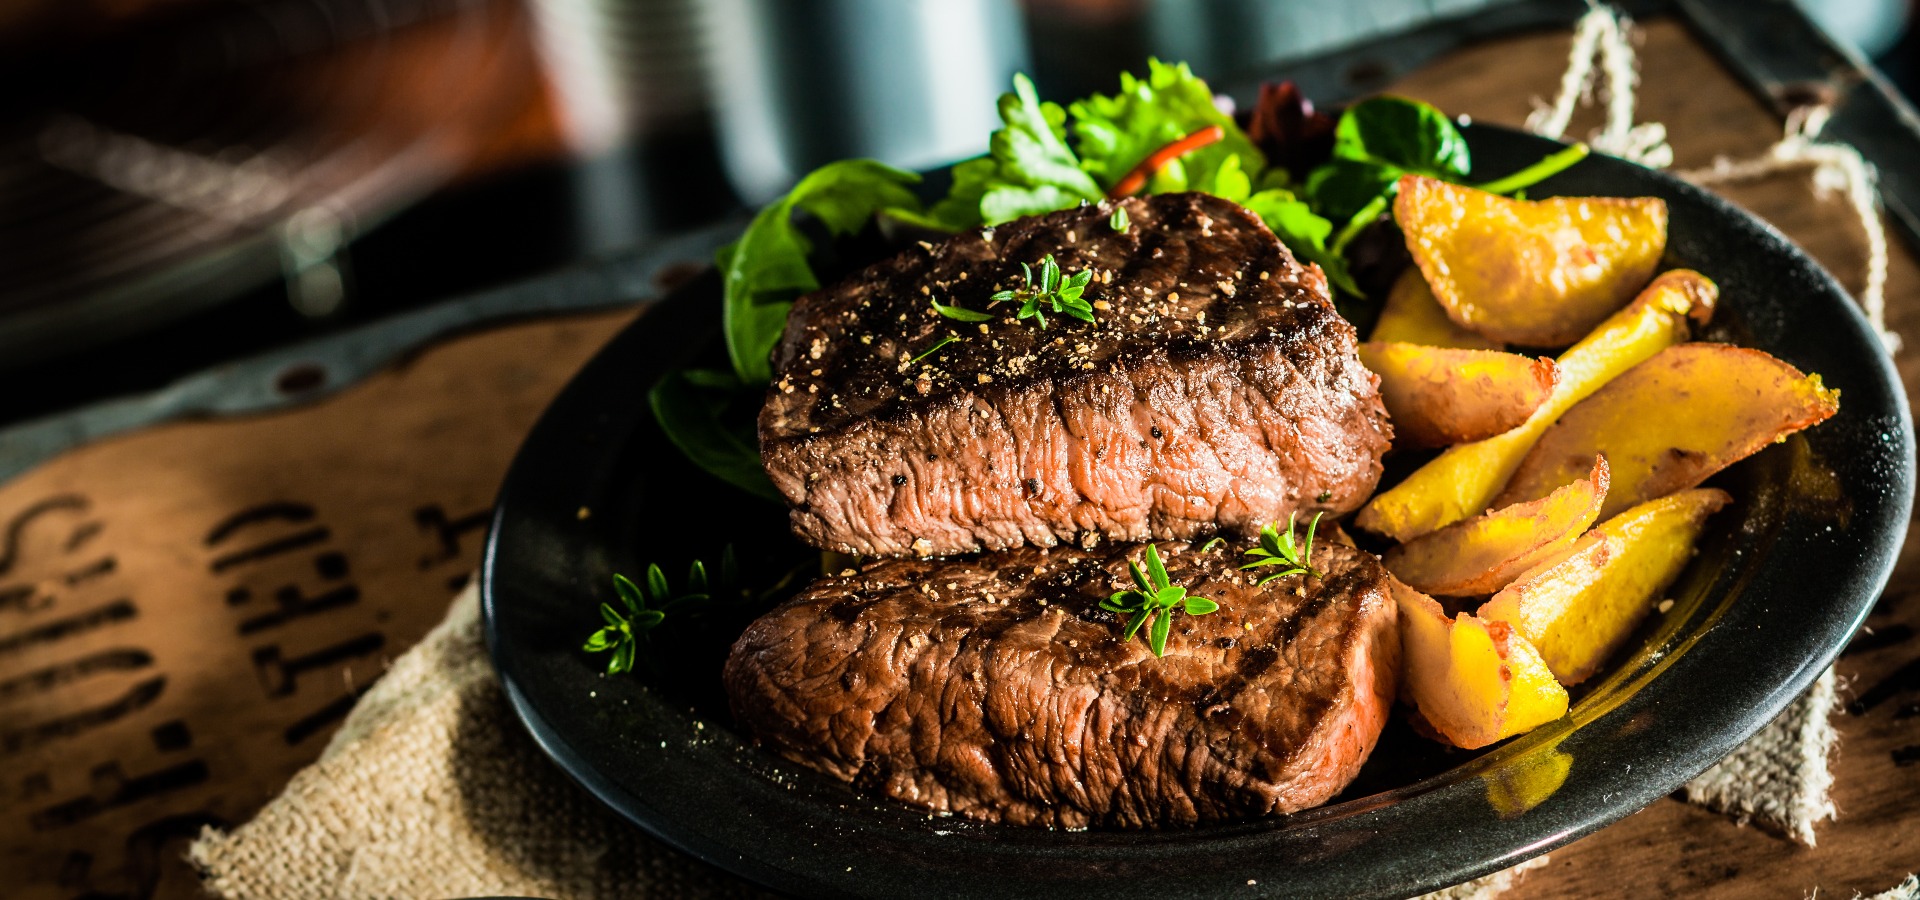 Healthy lean grilled beef steak and vegetables